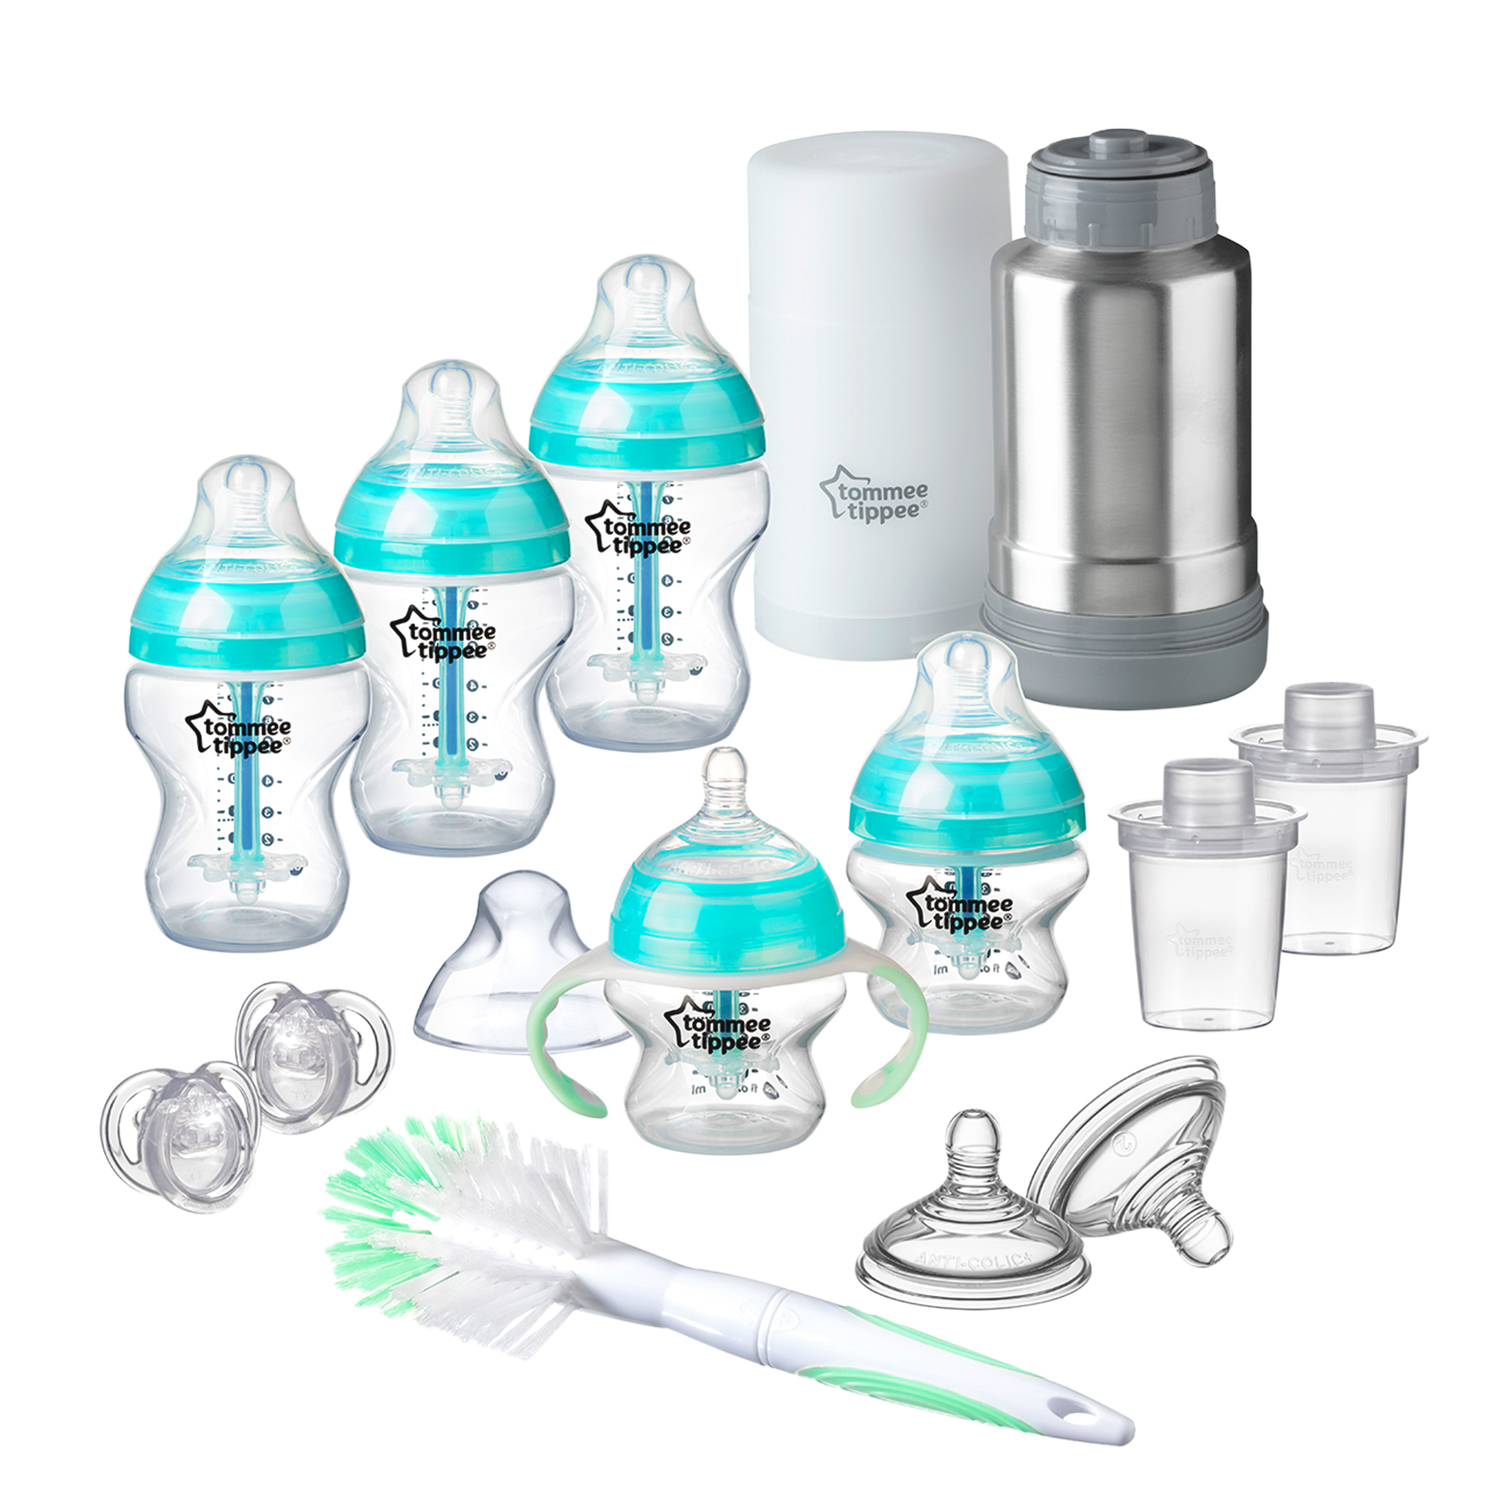 Tommee Tippee Advanced Anti Colic Newborn Baby Bottle Feeding Gift Set - image 1 of 13